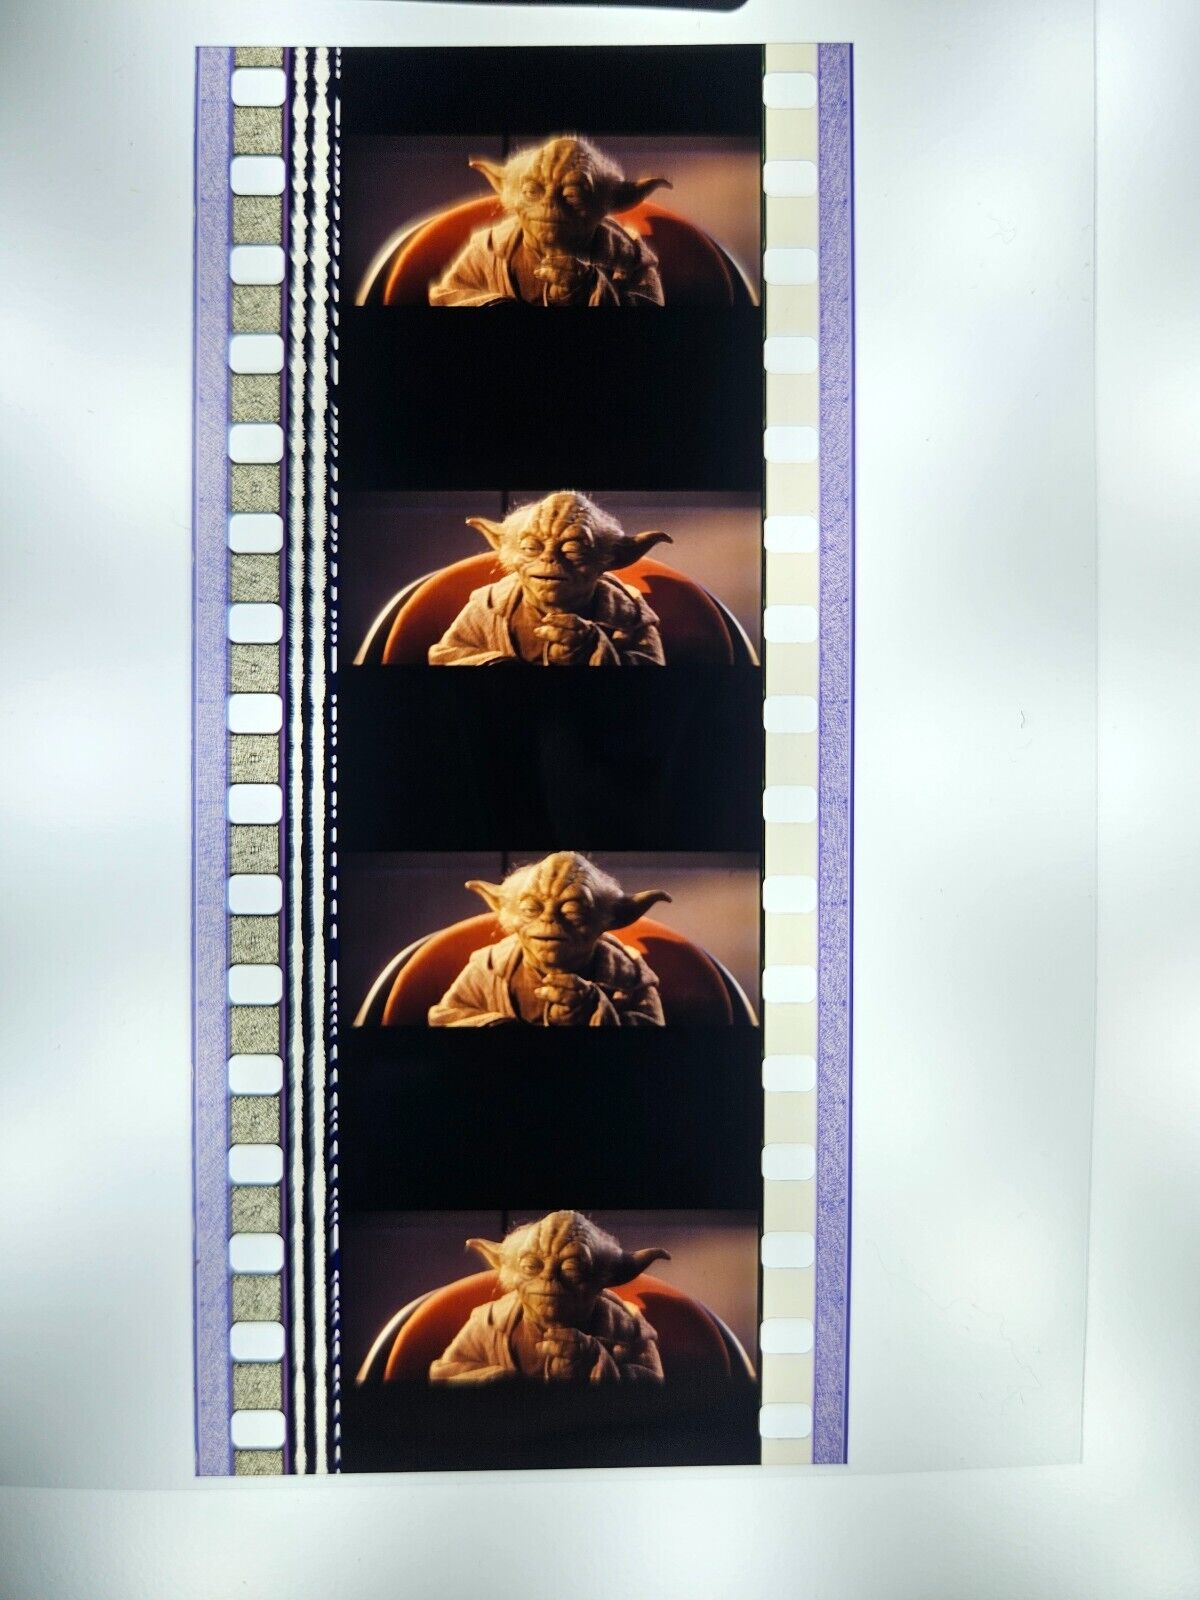 Yoda Star Wars Episode 1 Phantom Menace 35mm Original Film Cells SW2088 Star Wars 35mm Film Cell - Hobby Gems